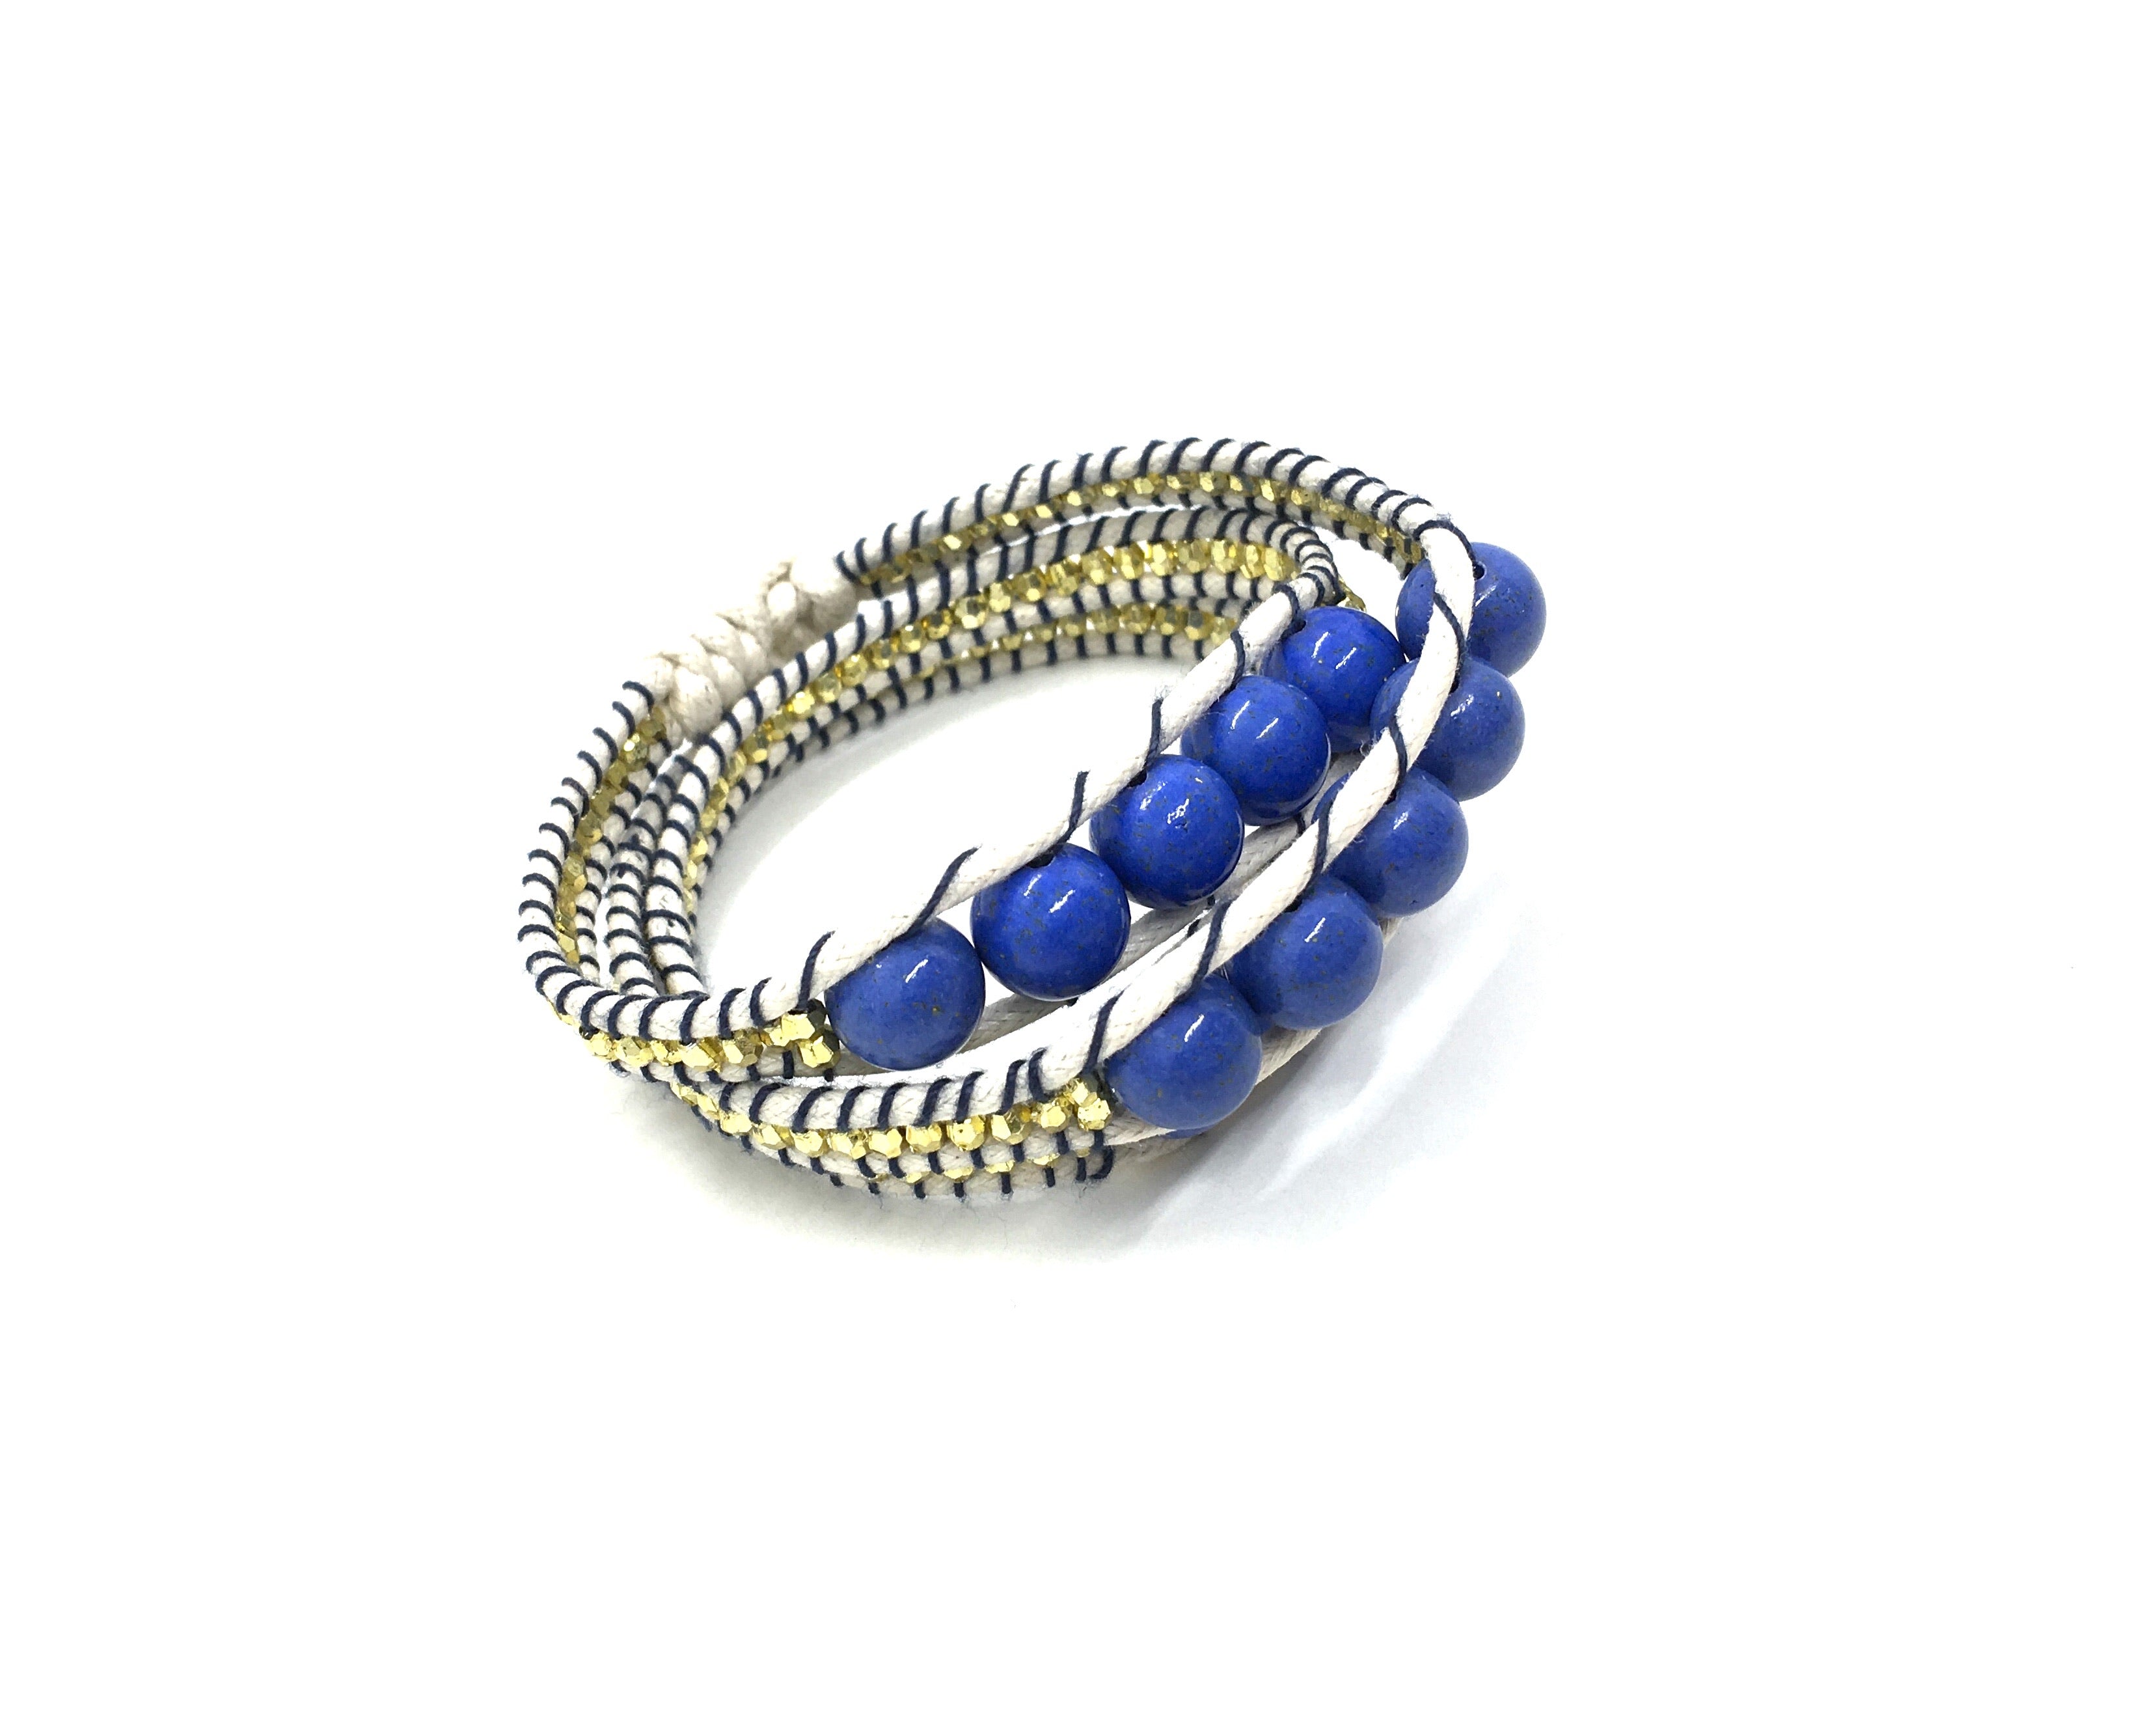 Wraparound bracelet blue stone, gold resin side bead beige cord black thread.